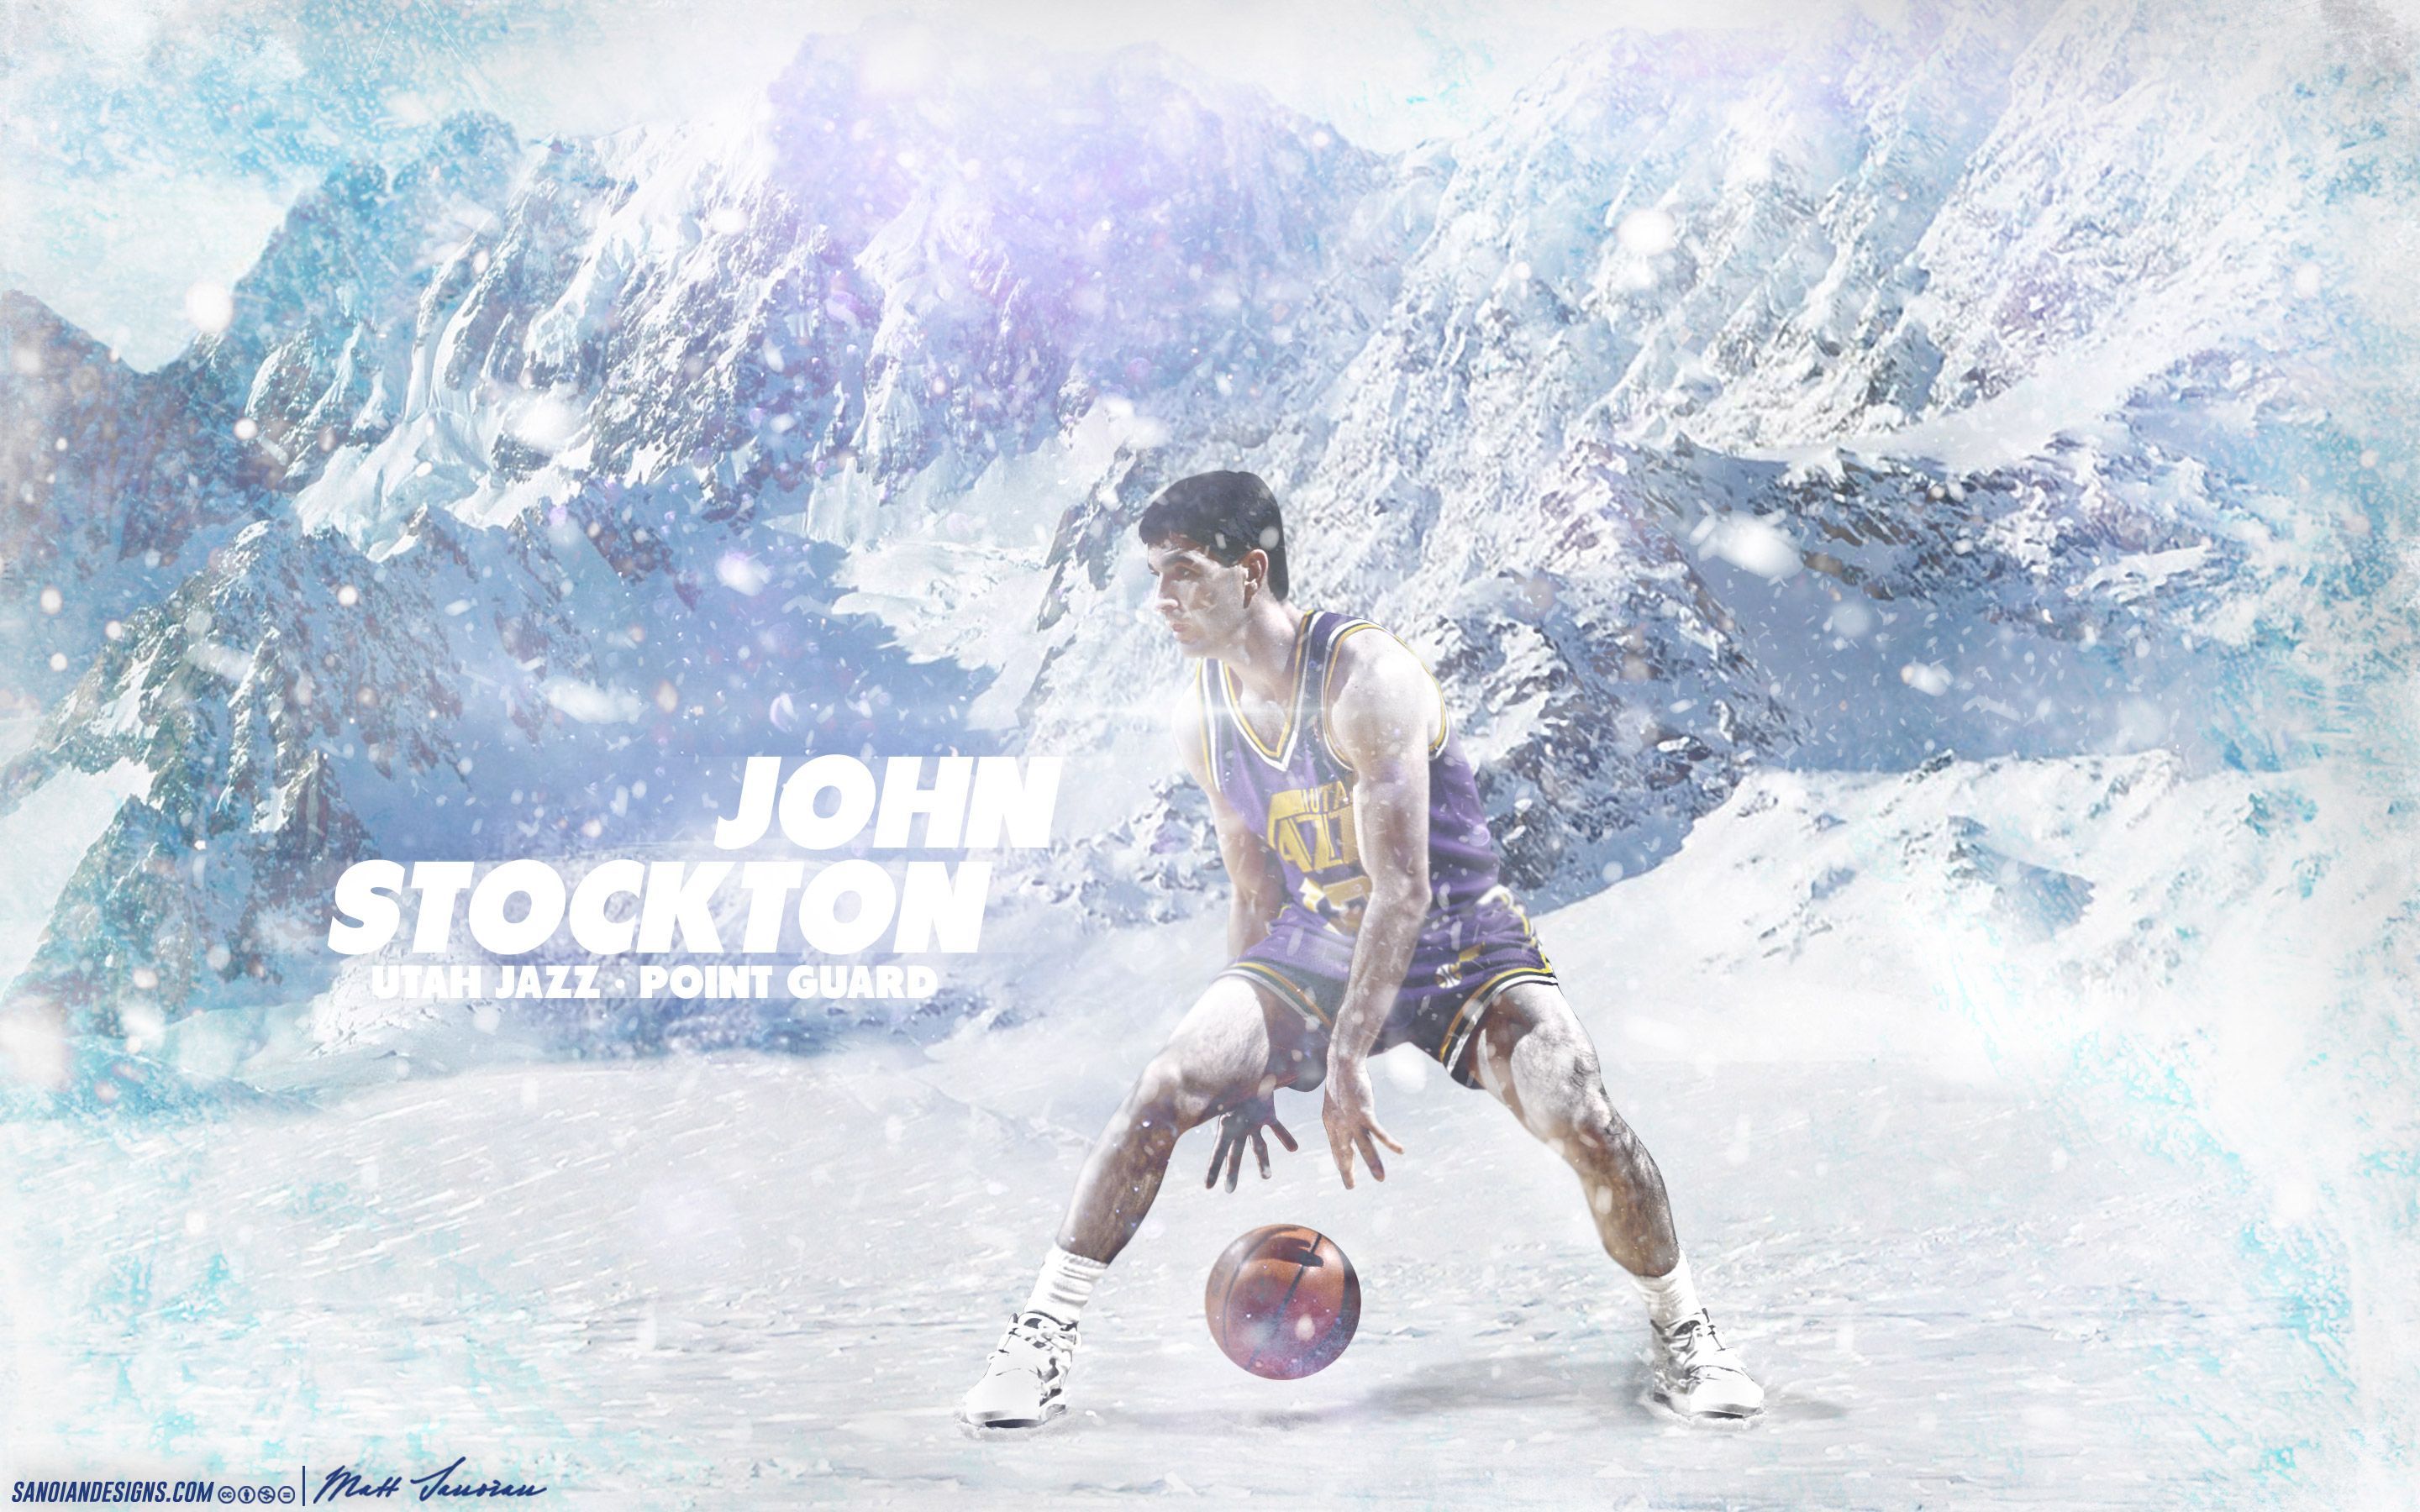 Utah Jazz Jerry Stockton Wallpaper. NBA Legend. Utah jazz, John